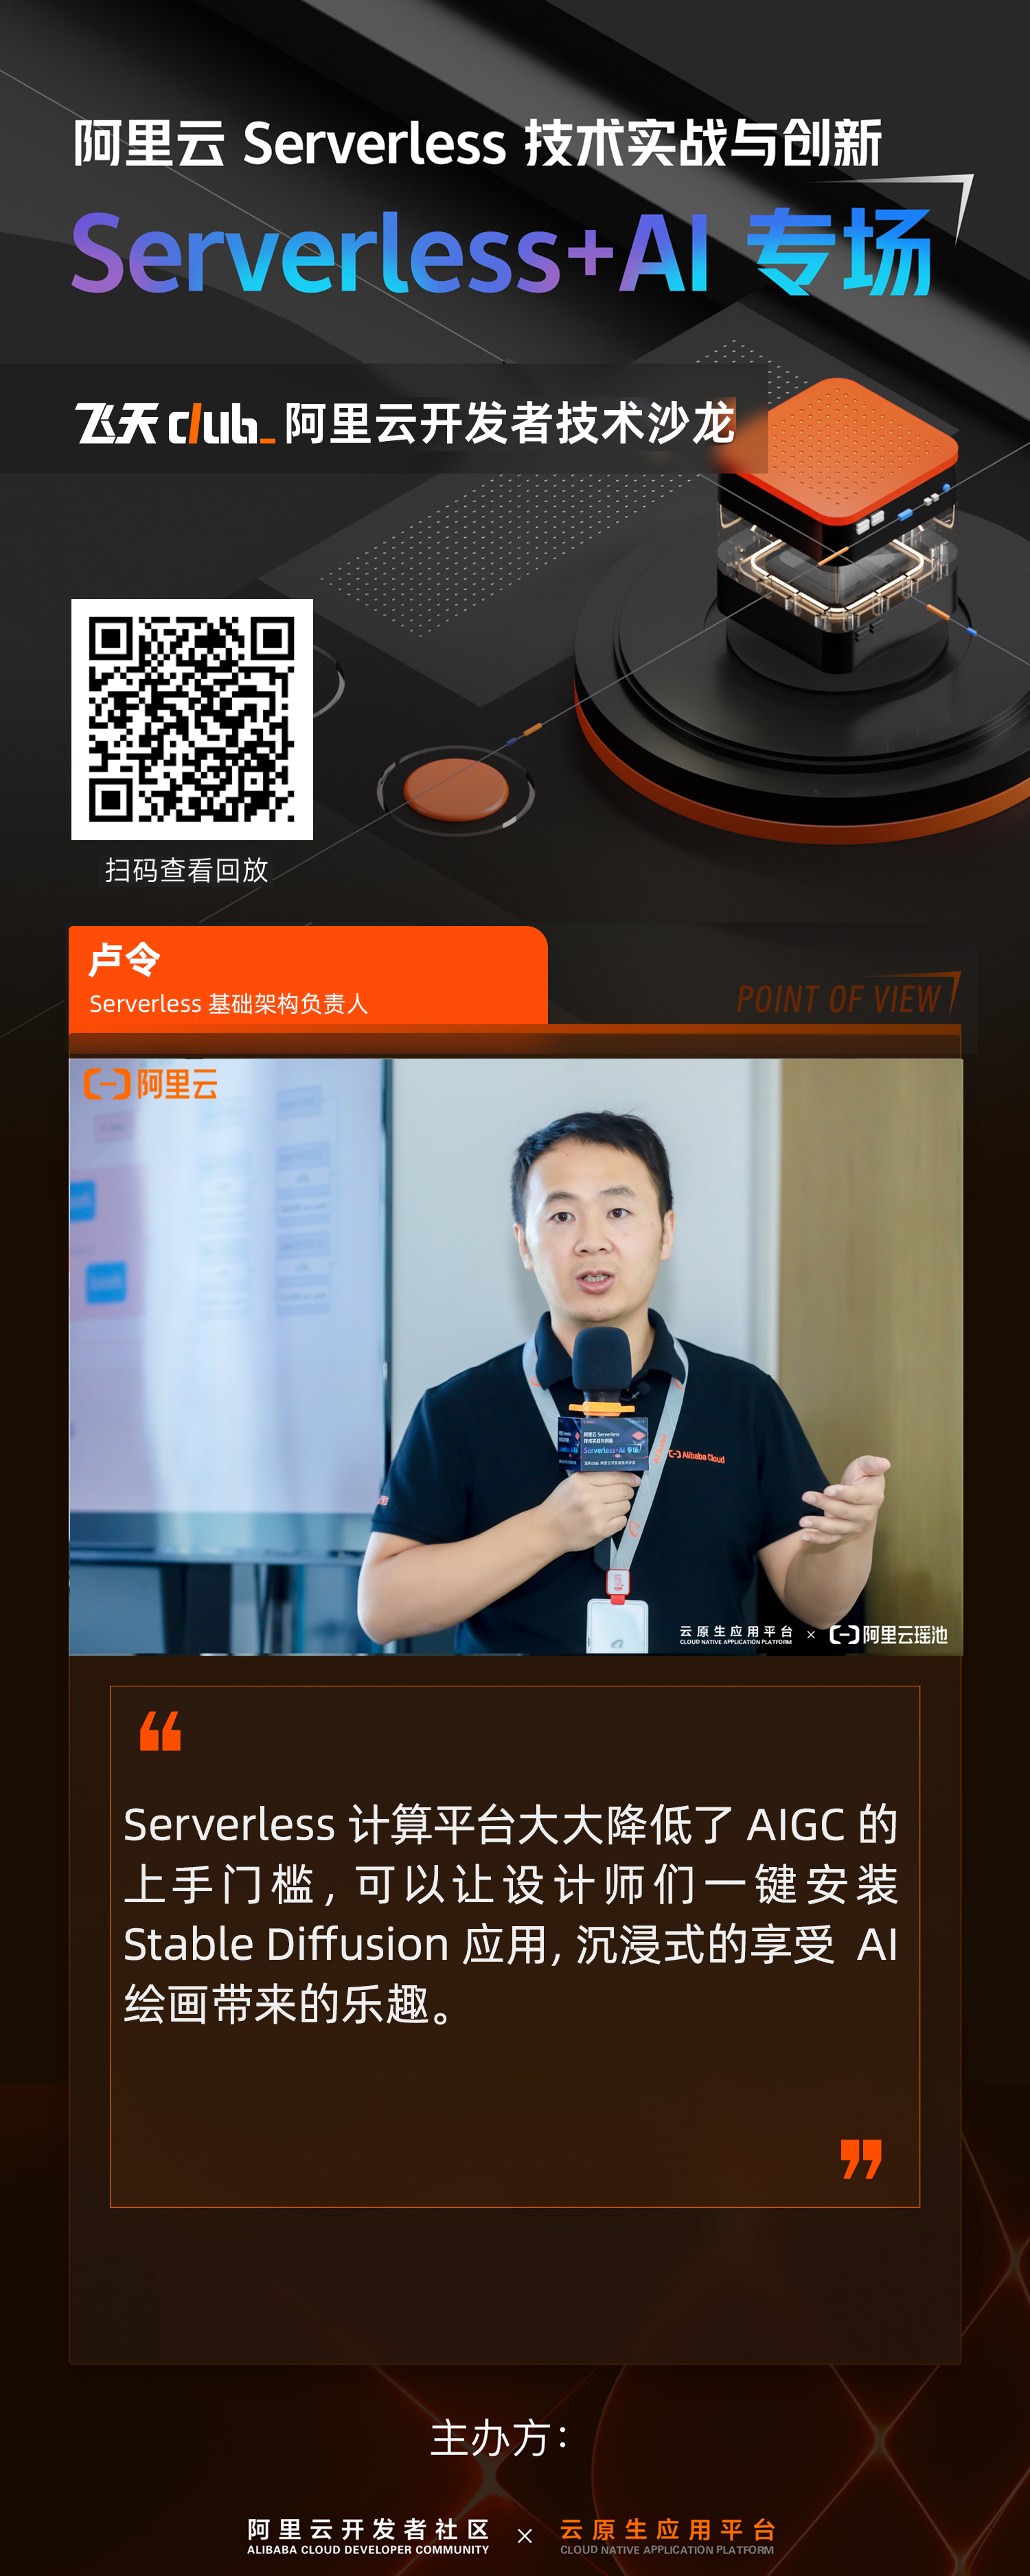 Lecturer poster Lu Ling.jpg